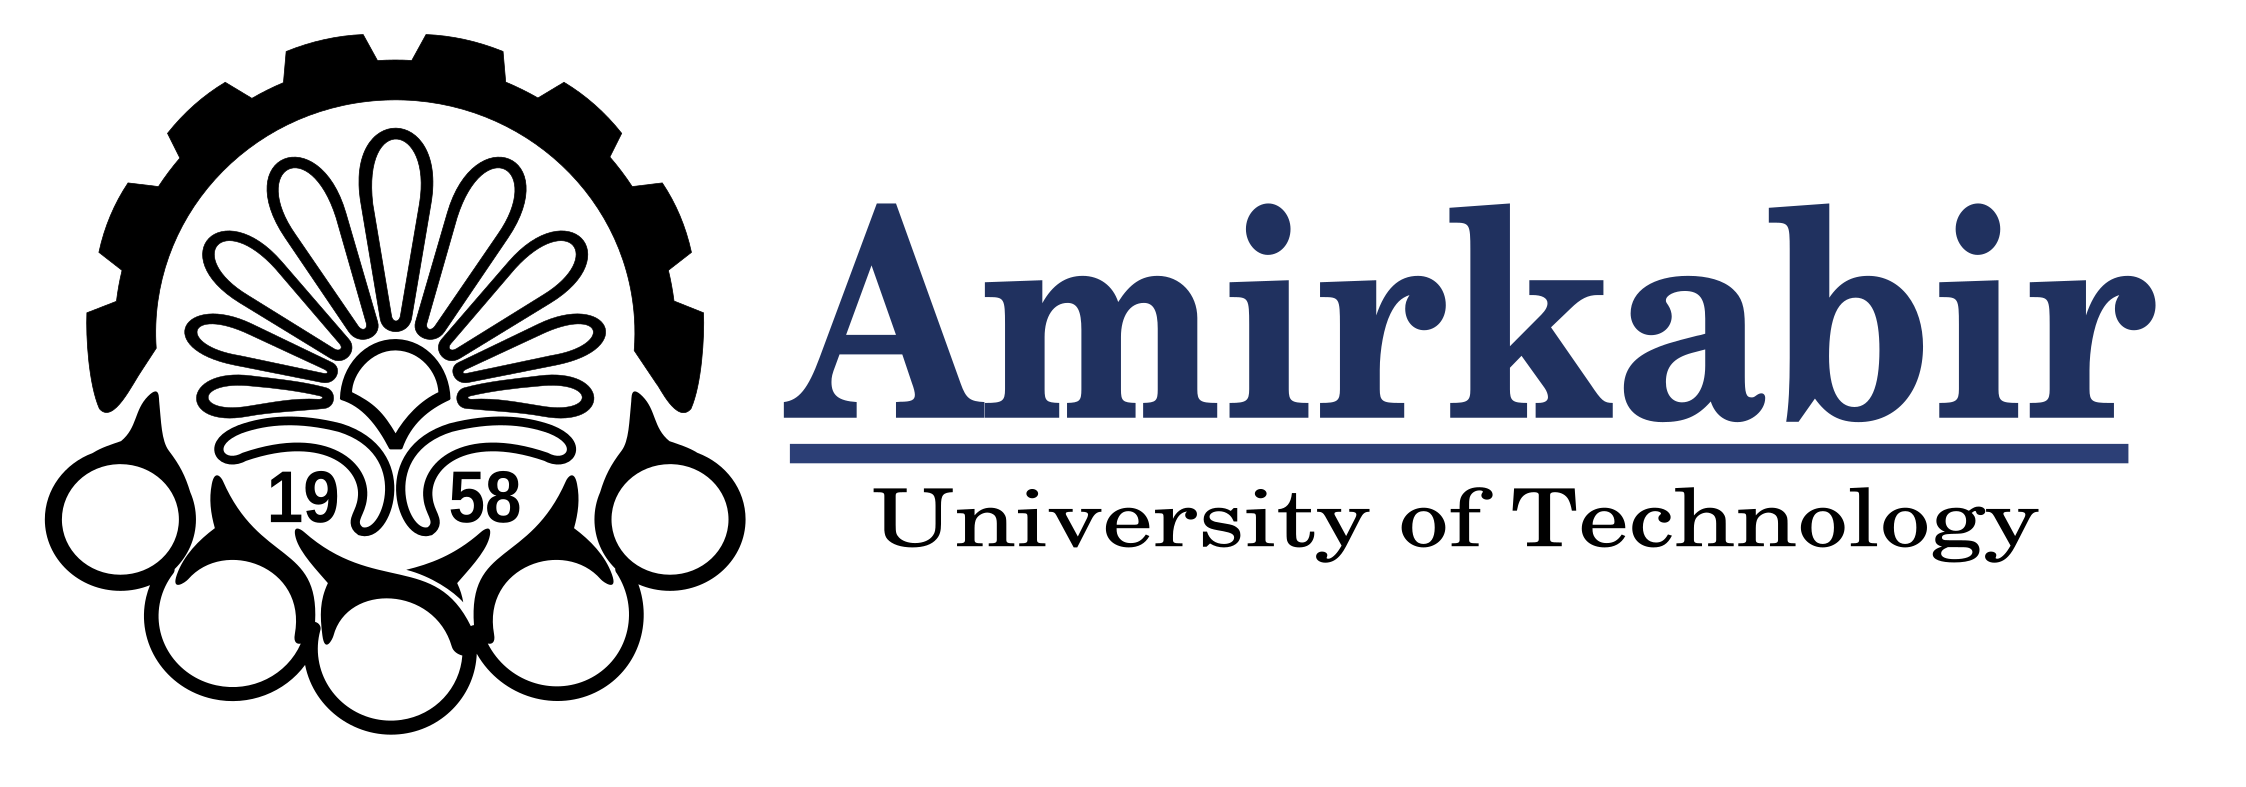 Amirkabir university logo